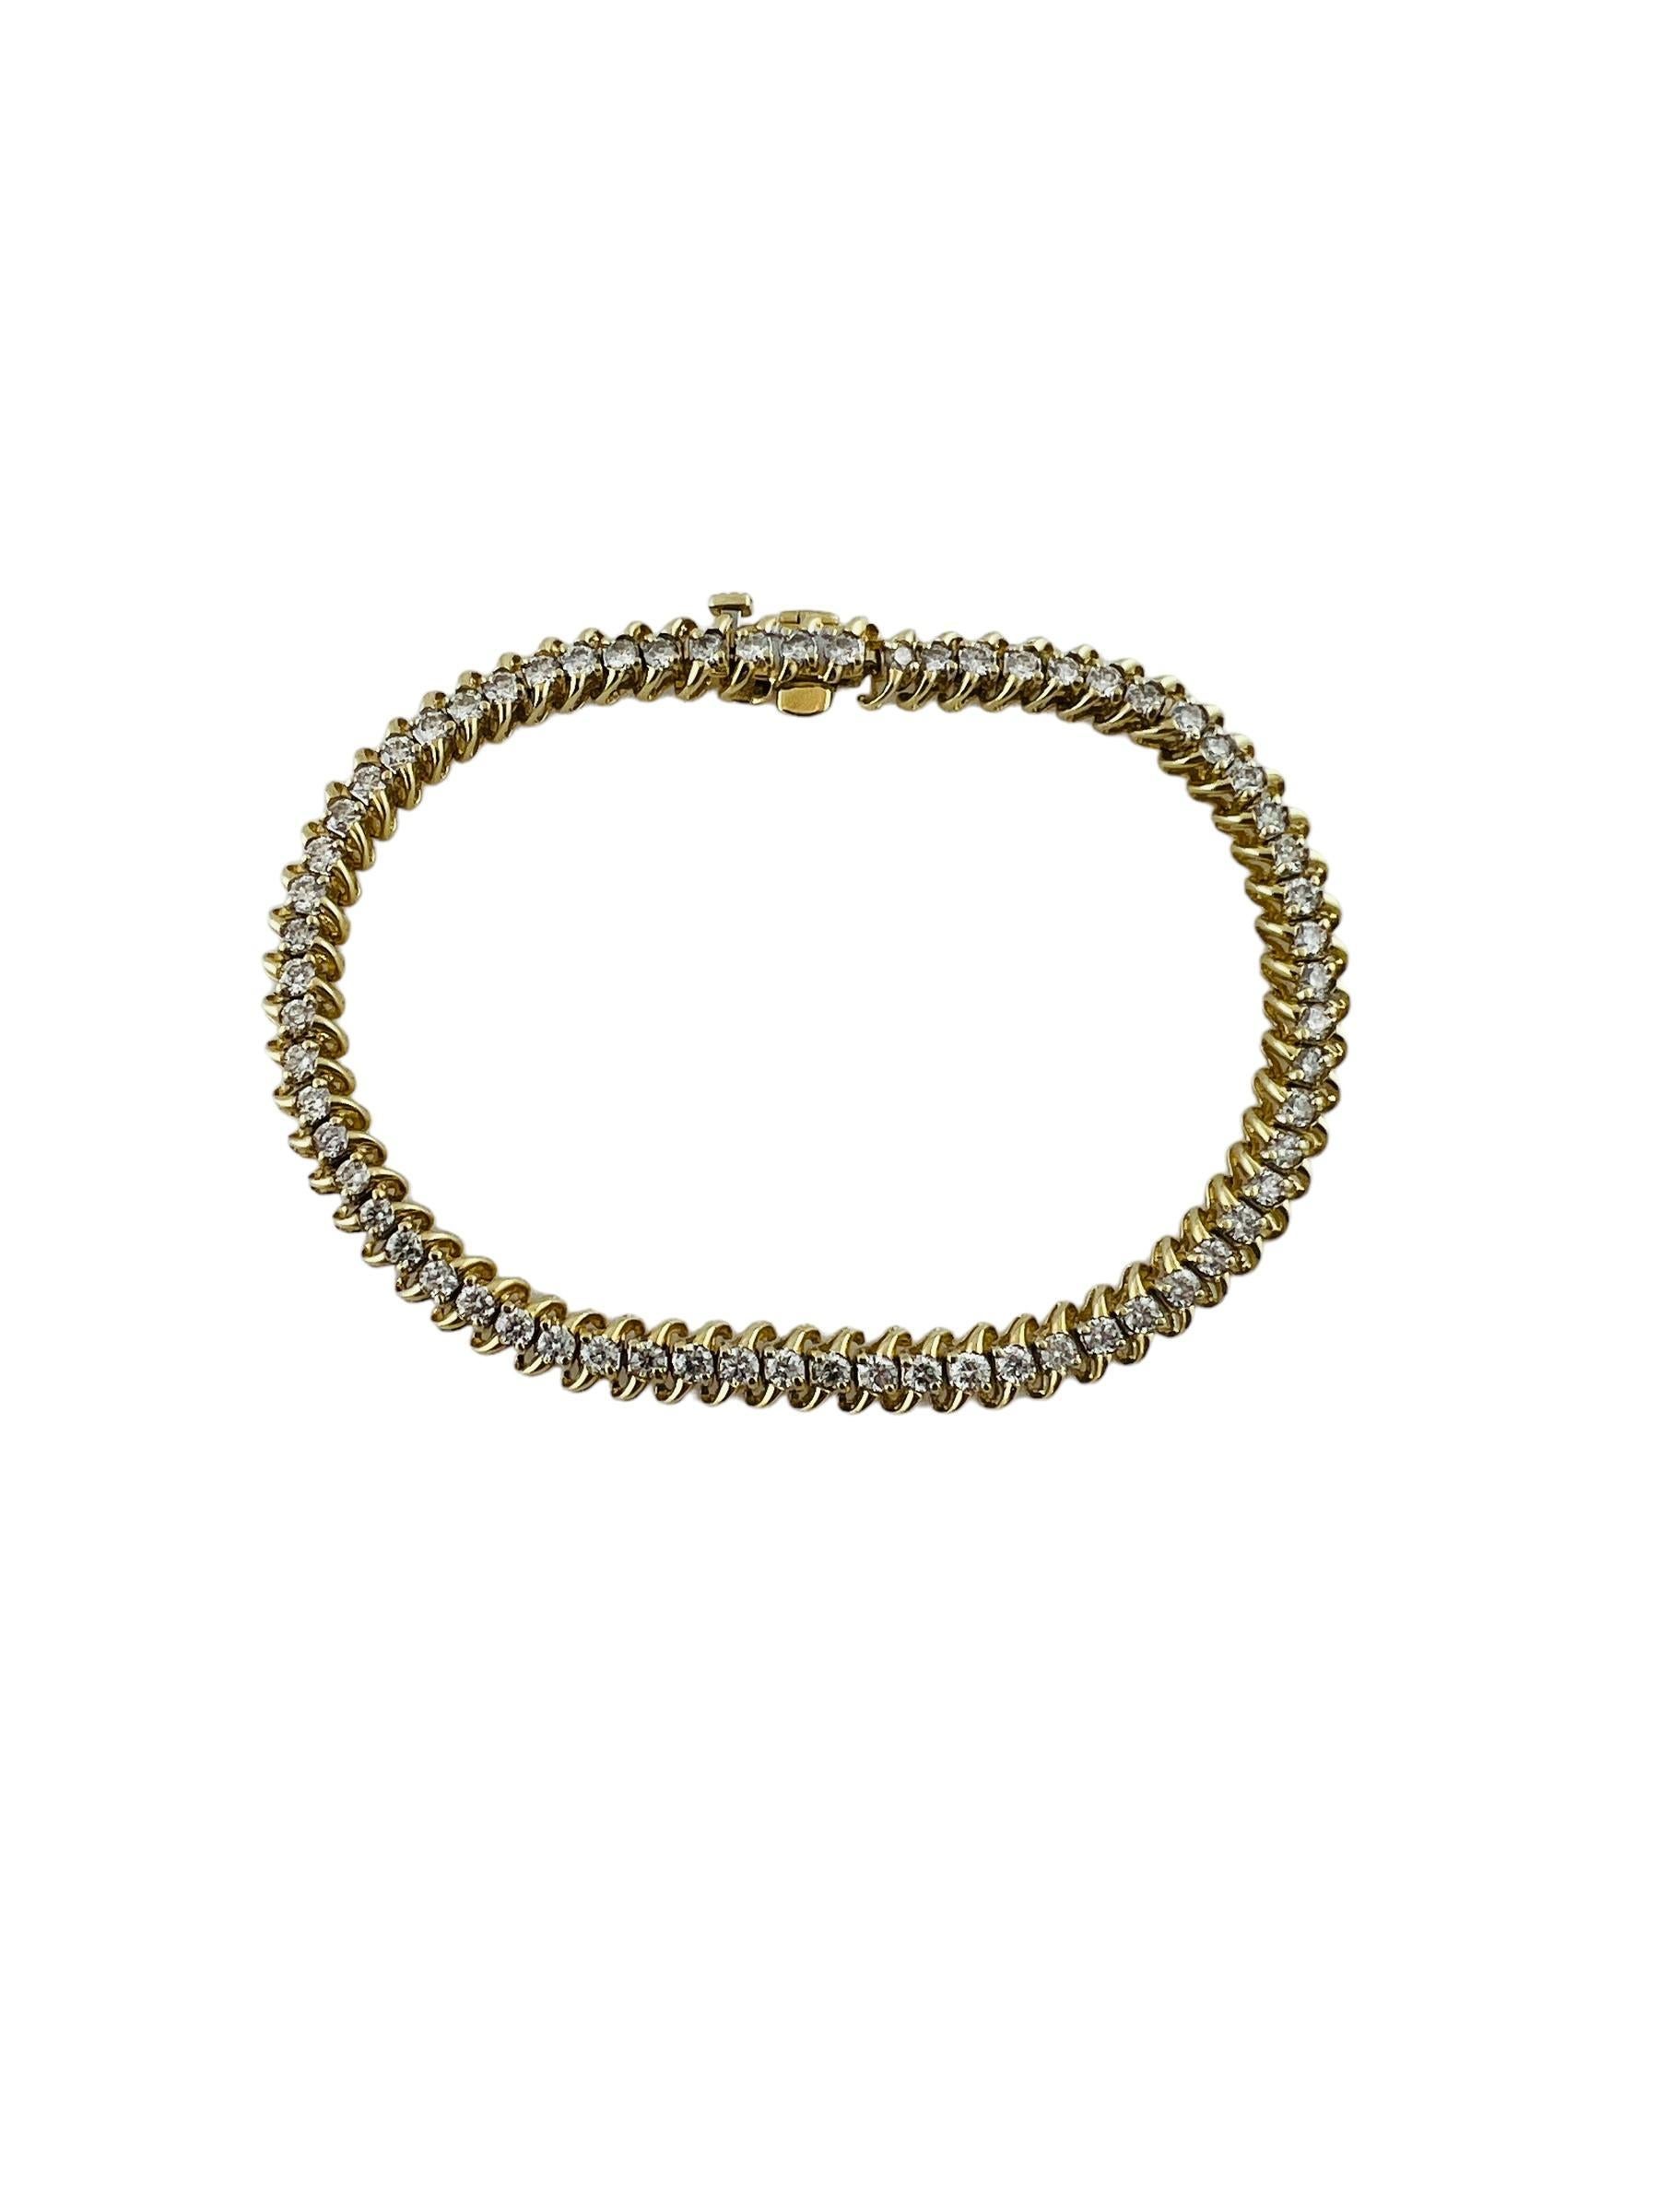 Women's 14 Karat Yellow Gold Diamond Tennis Bracelet 3.25 TCW. #16635 For Sale